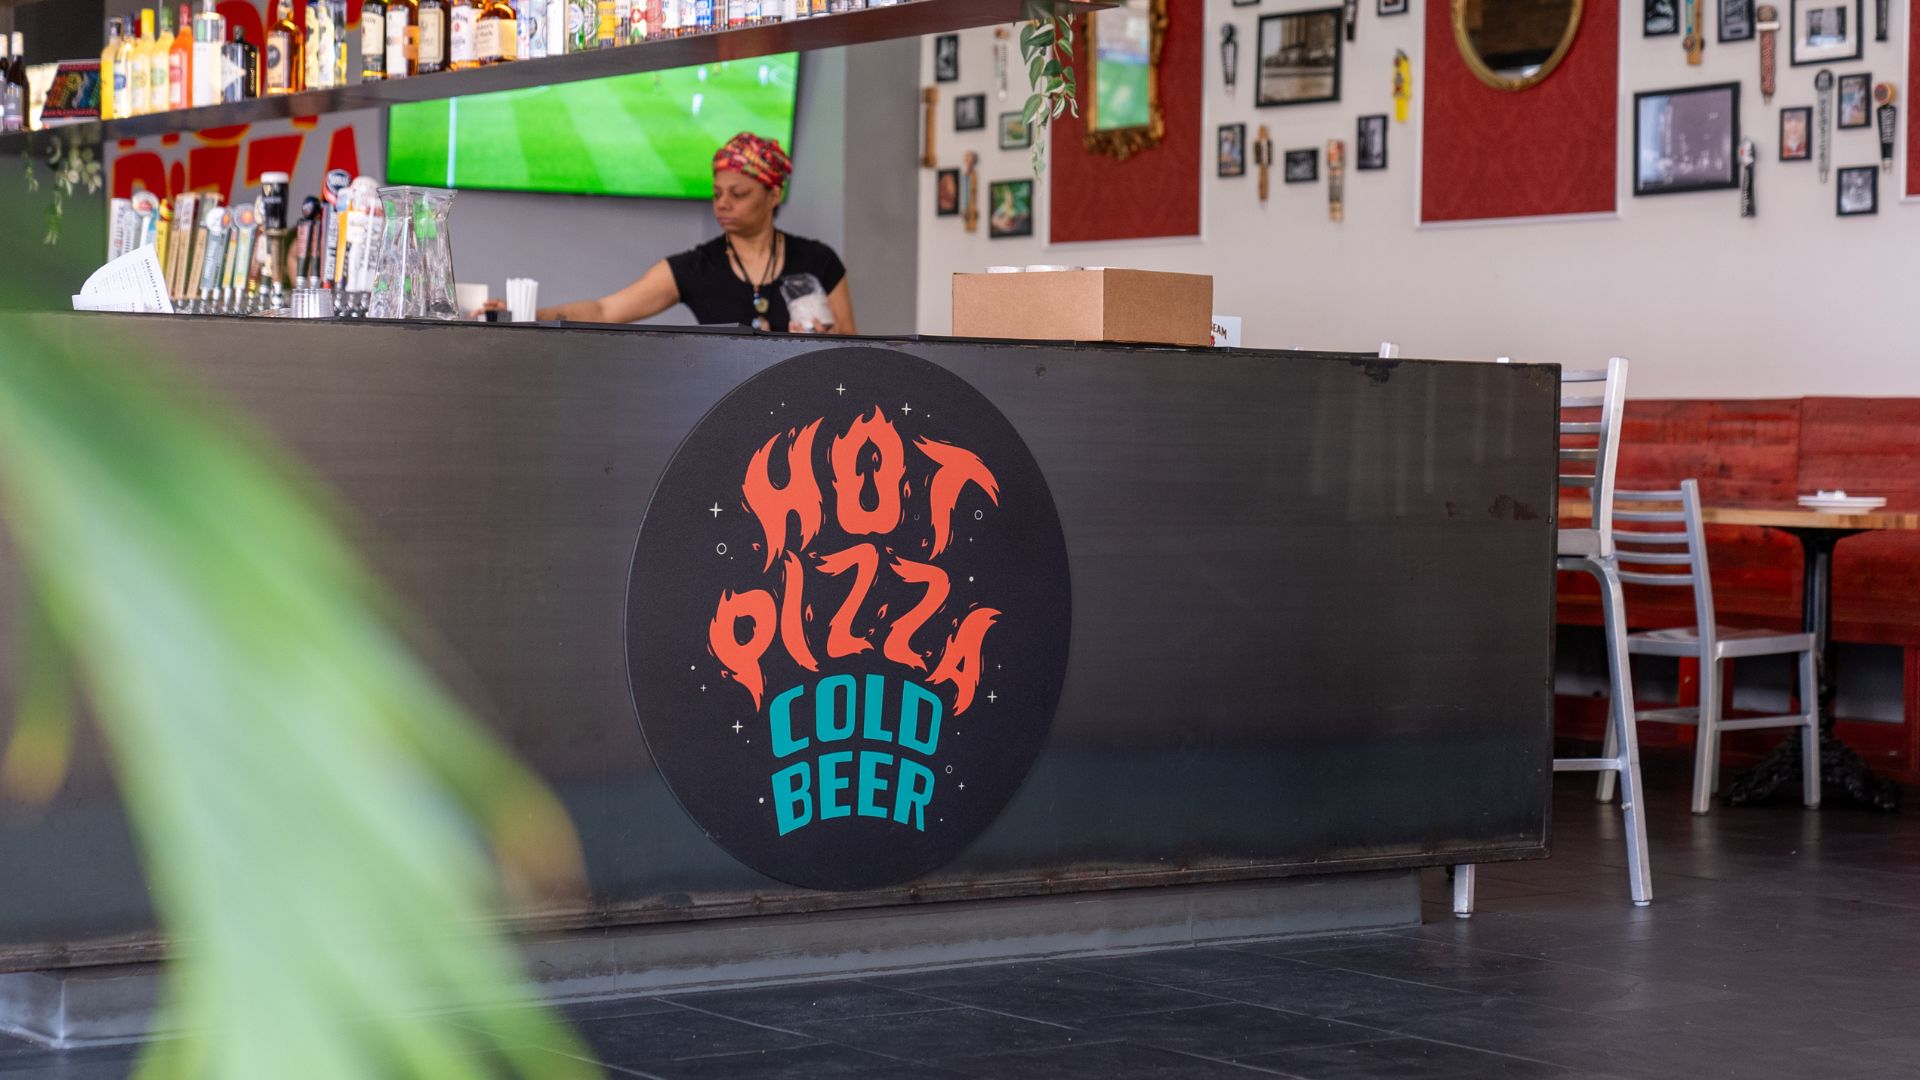 A woman serves beer behind the bar at Hot Pizza Cold Beer.